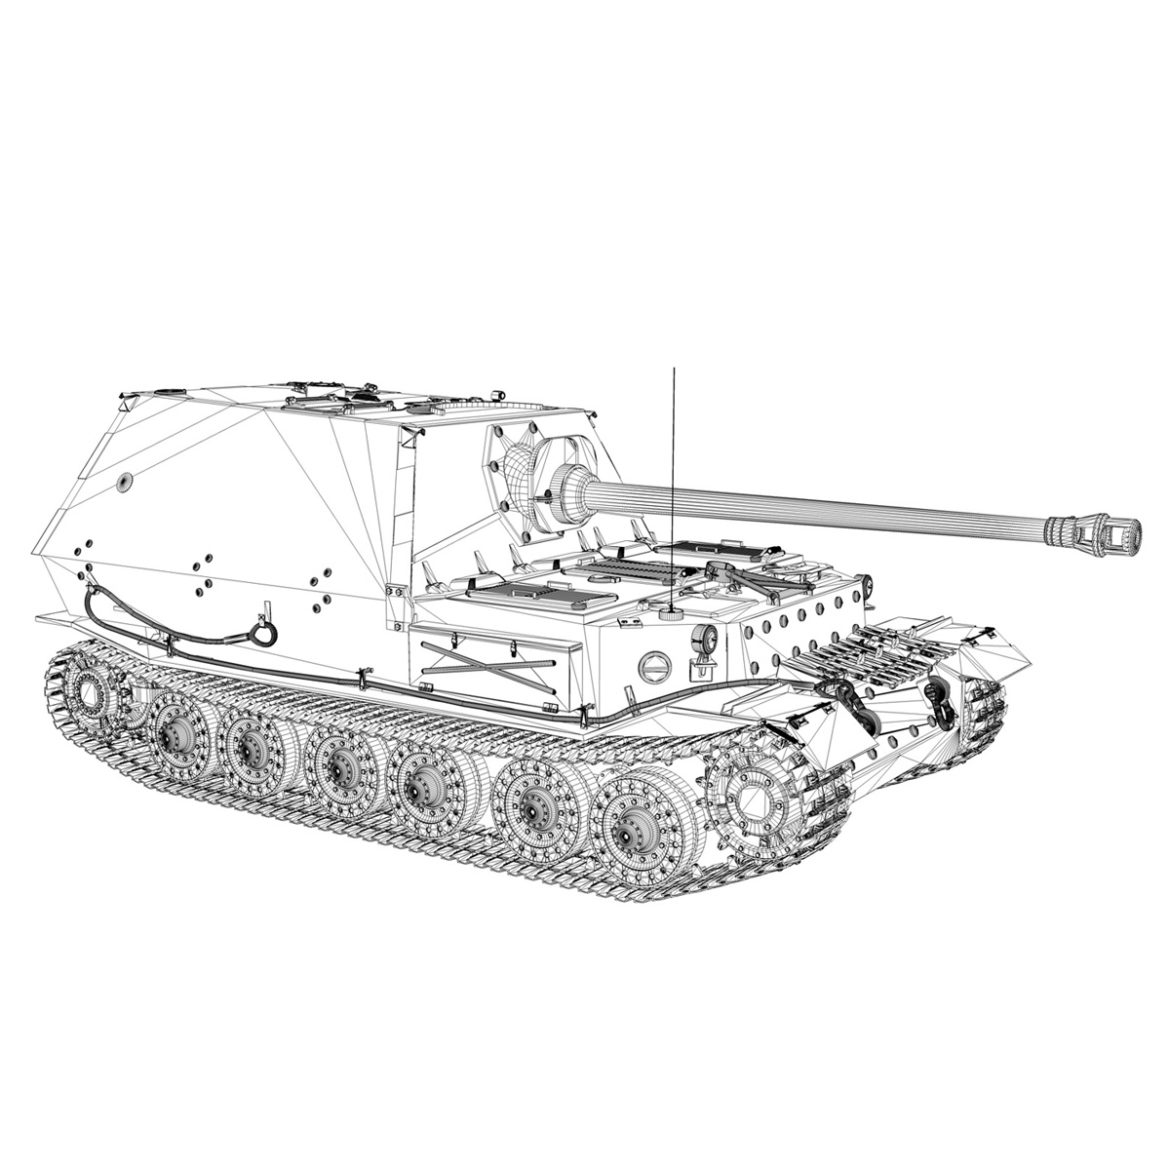 ferdinand tank destroyer – tiger (p) – 231 3d model 3ds fbx c4d lwo obj 295027